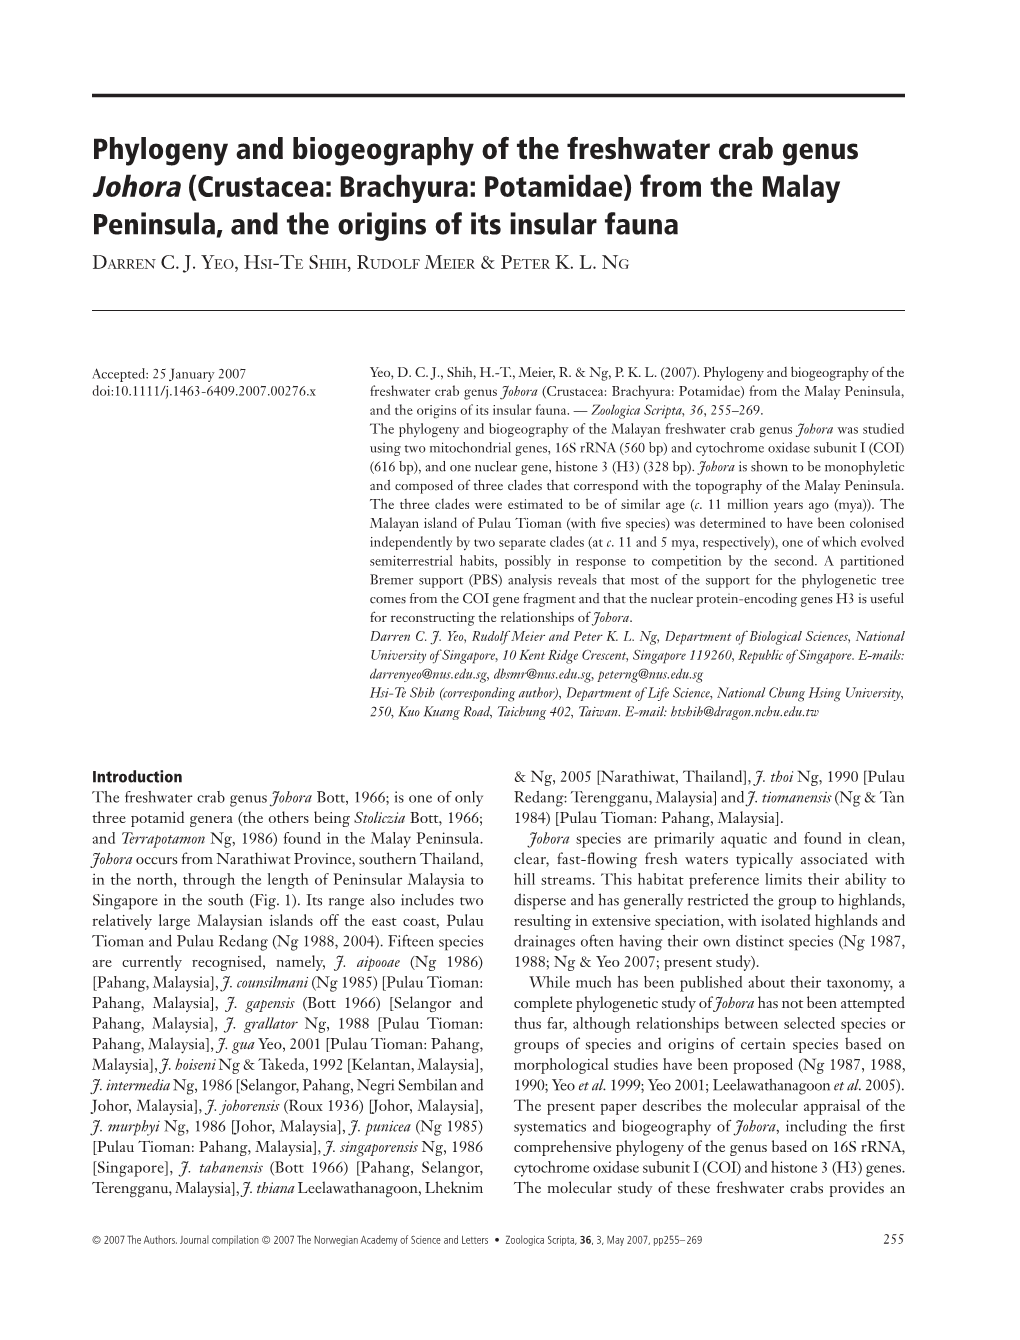 Phylogeny and Biogeography of the Freshwater Crab Genus Johora (Crustacea: Brachyura: Potamidae) from the Malay Peninsula, and T